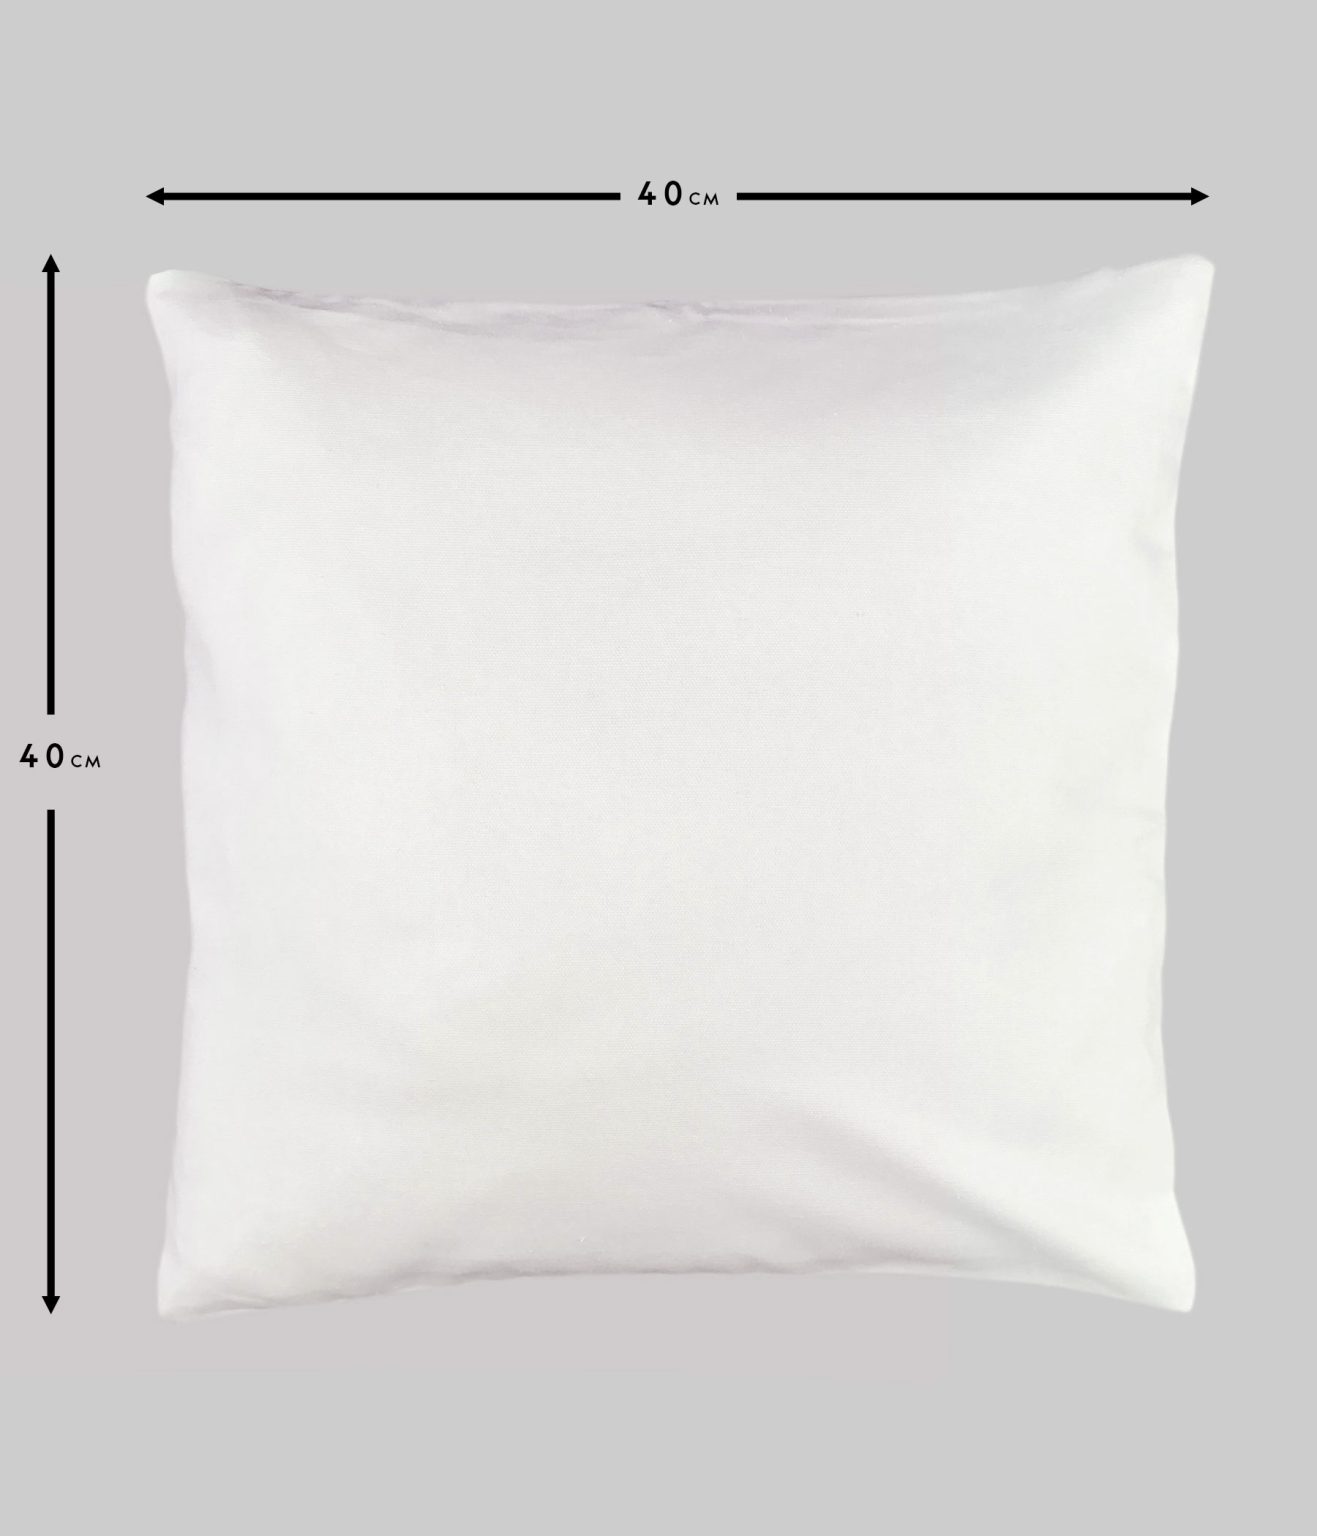 Blank white cushion covers 40cm x 40cm for screen printing